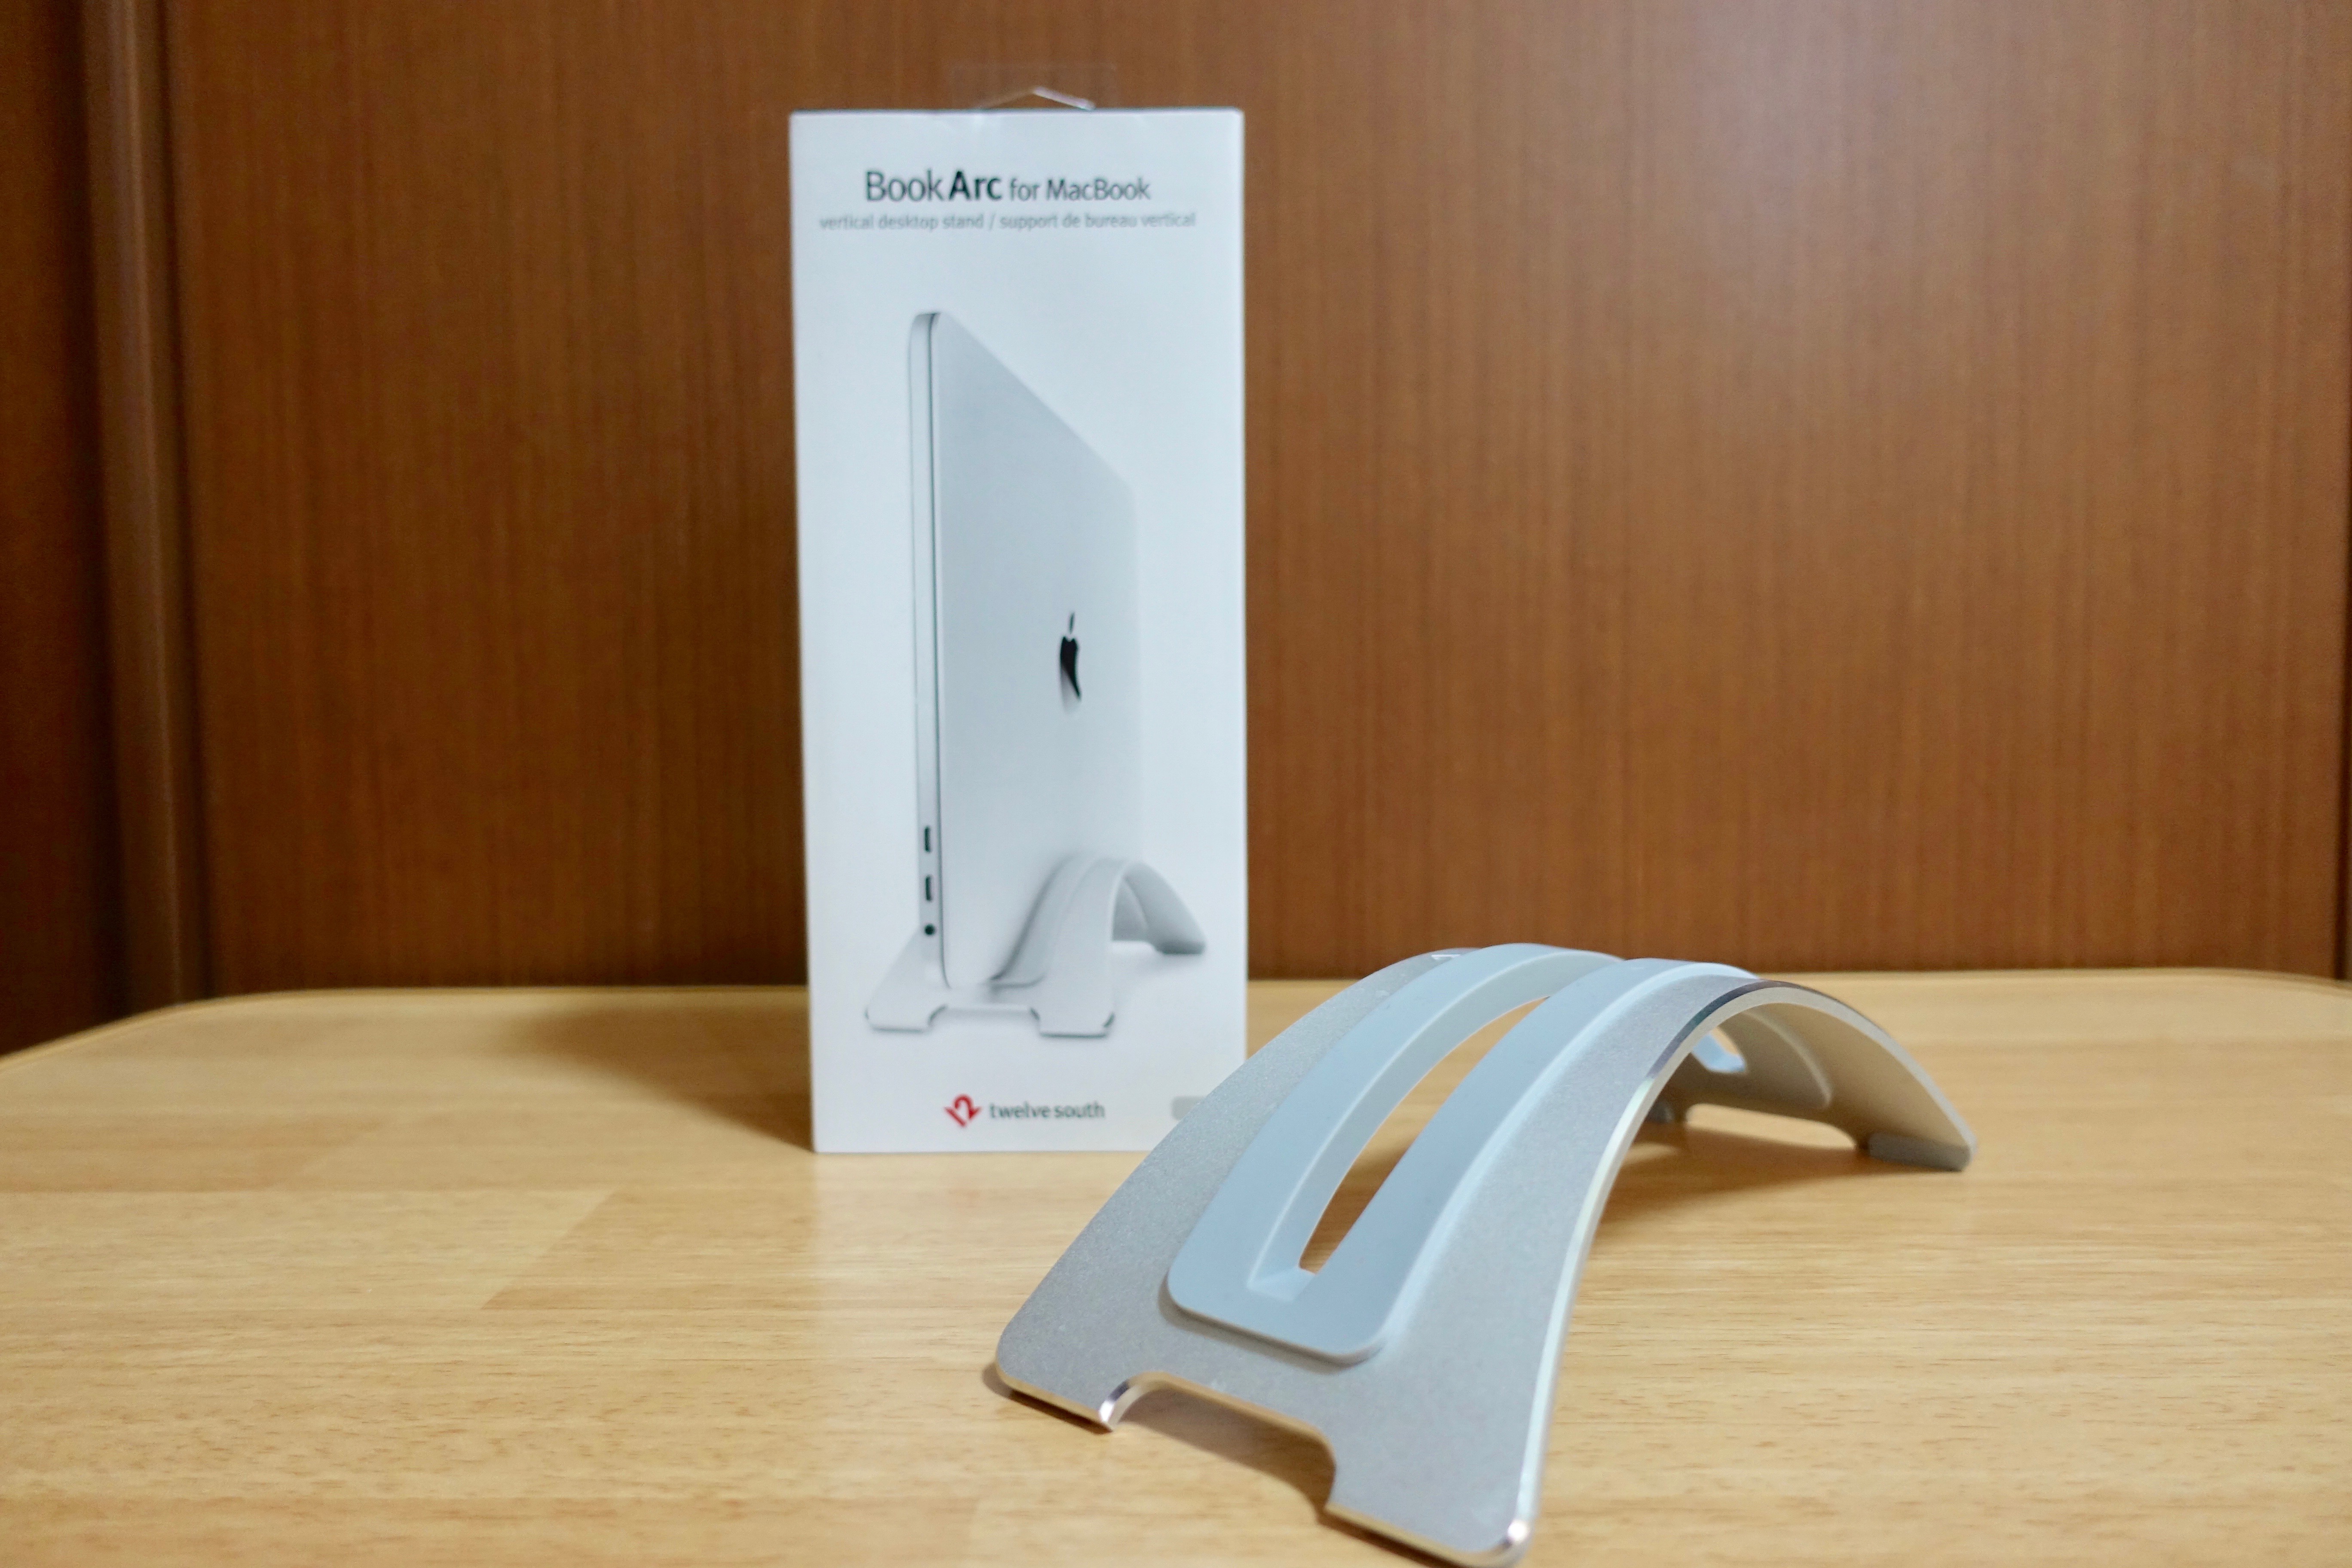 Twelve South「BookArc for MacBook v2」を購入！ クラムシェルモードに最適なMacBook用スタンド！